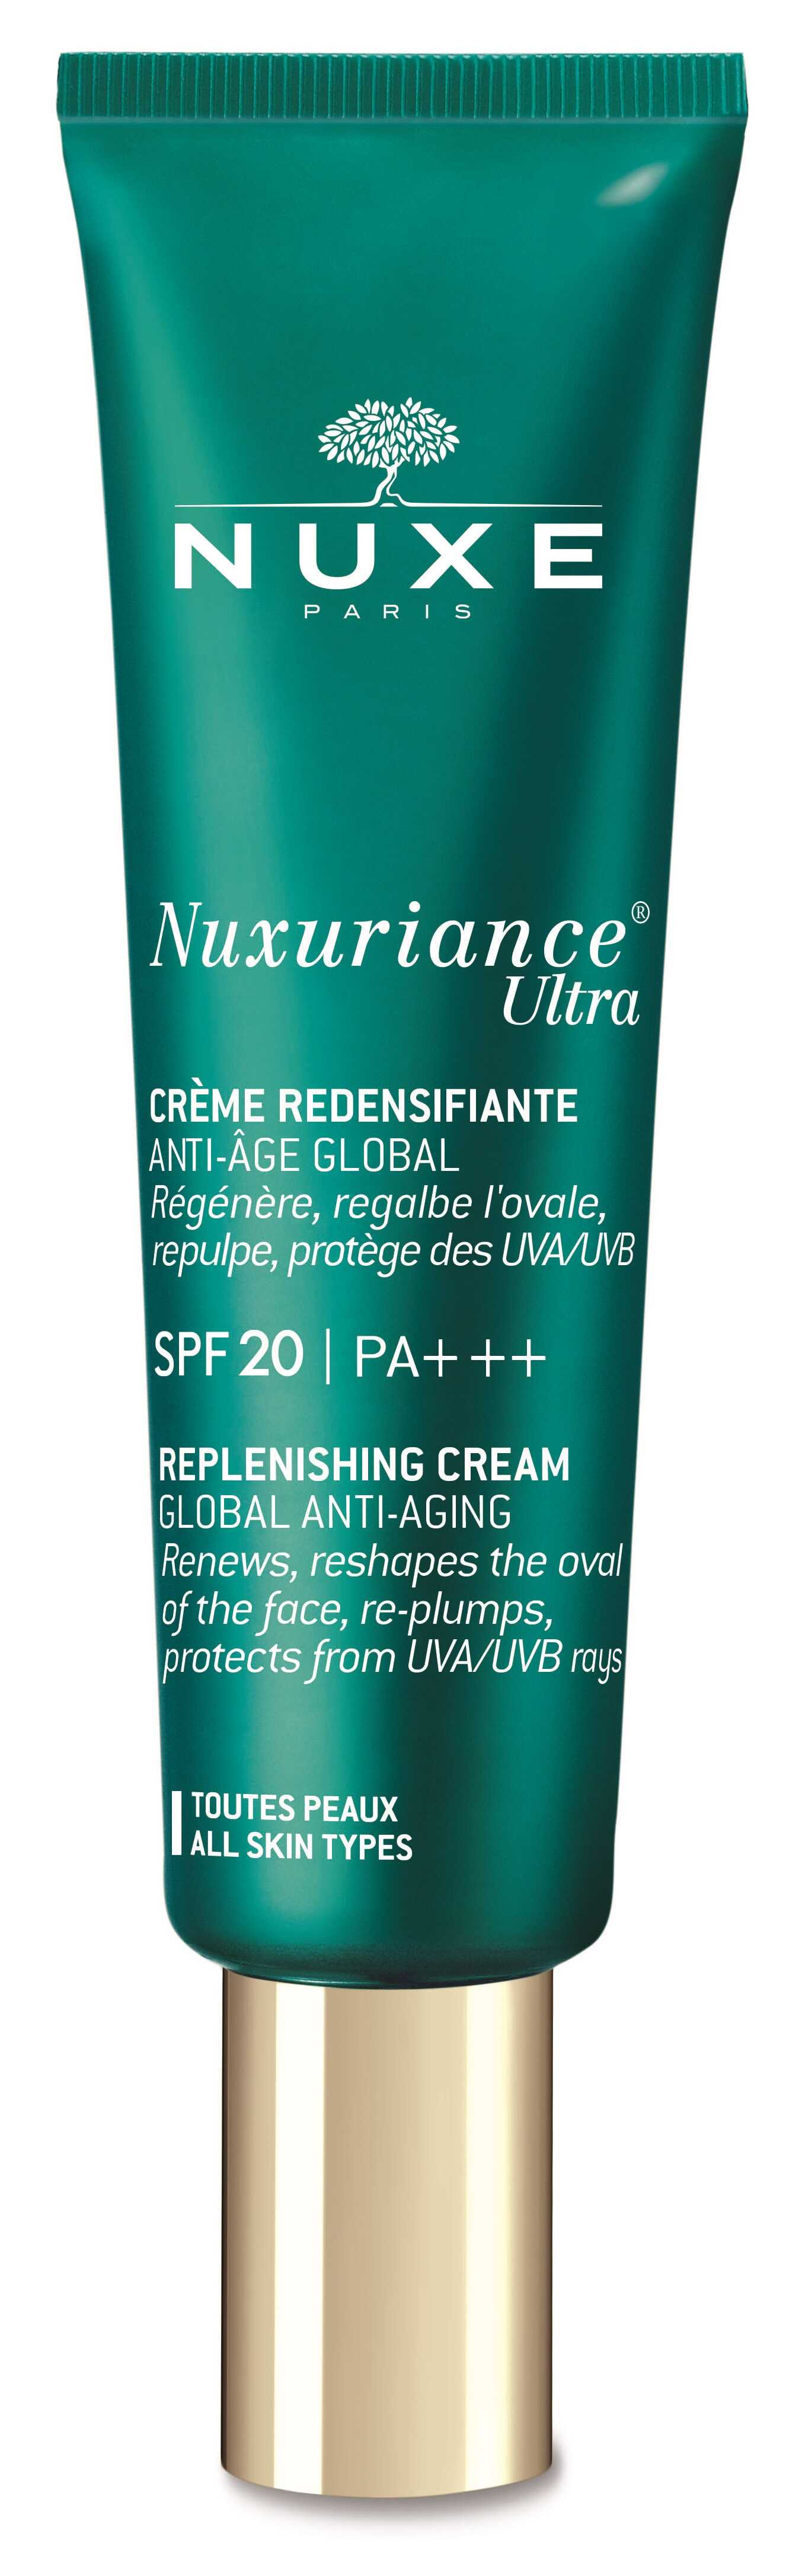 NUXE Nuxuriance Ultra teljeskörű anti-aging krém SPF20 50 ml